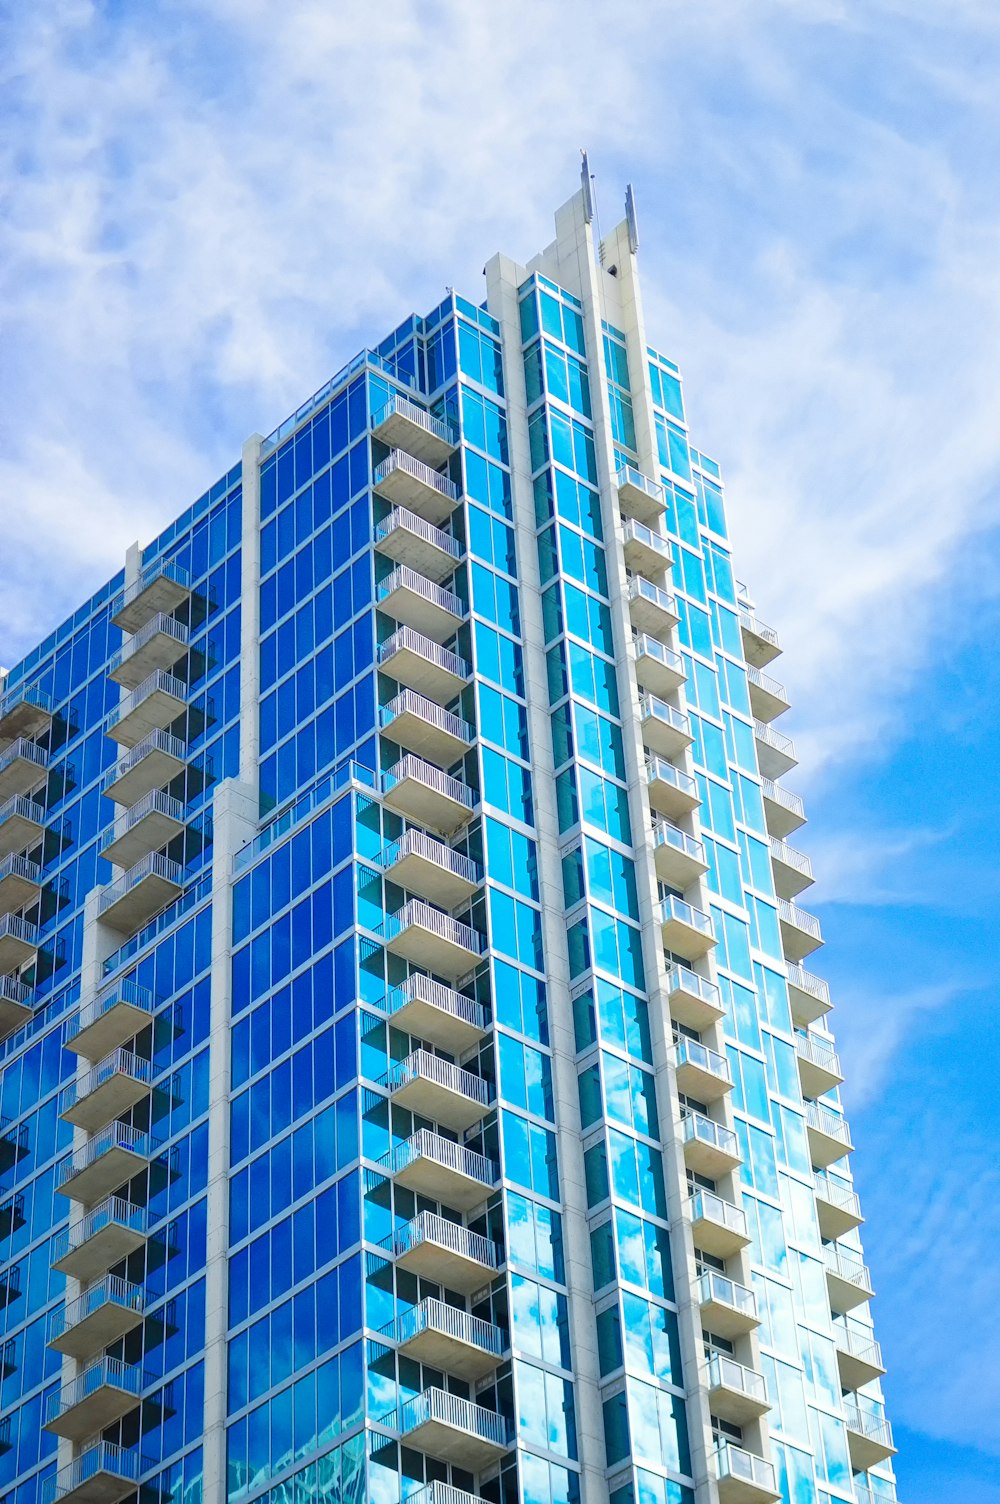 edifício de concreto branco e azul sob o céu azul durante o dia